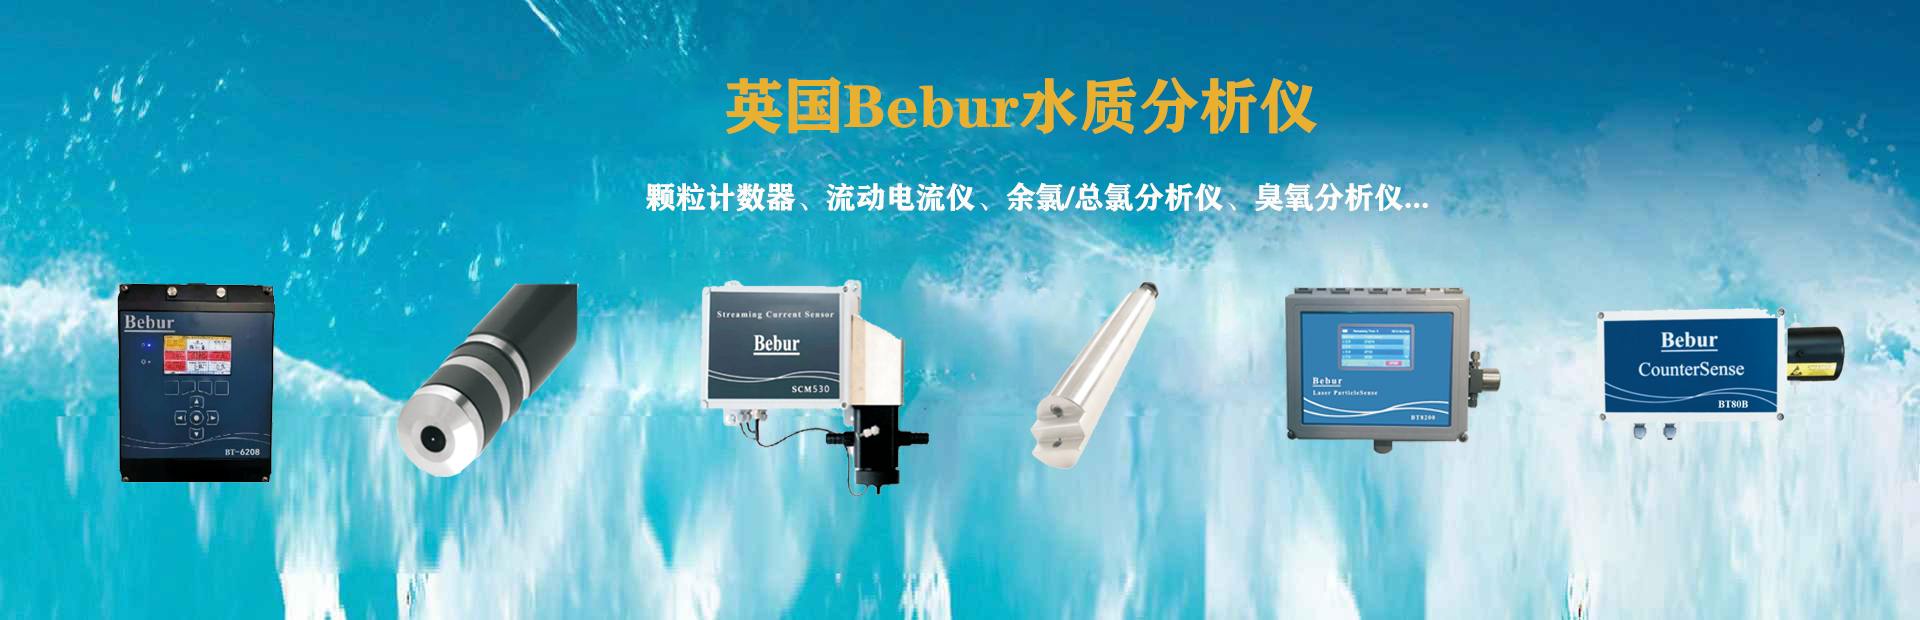 Bebur巴倍尔流动电流检测仪系列产品